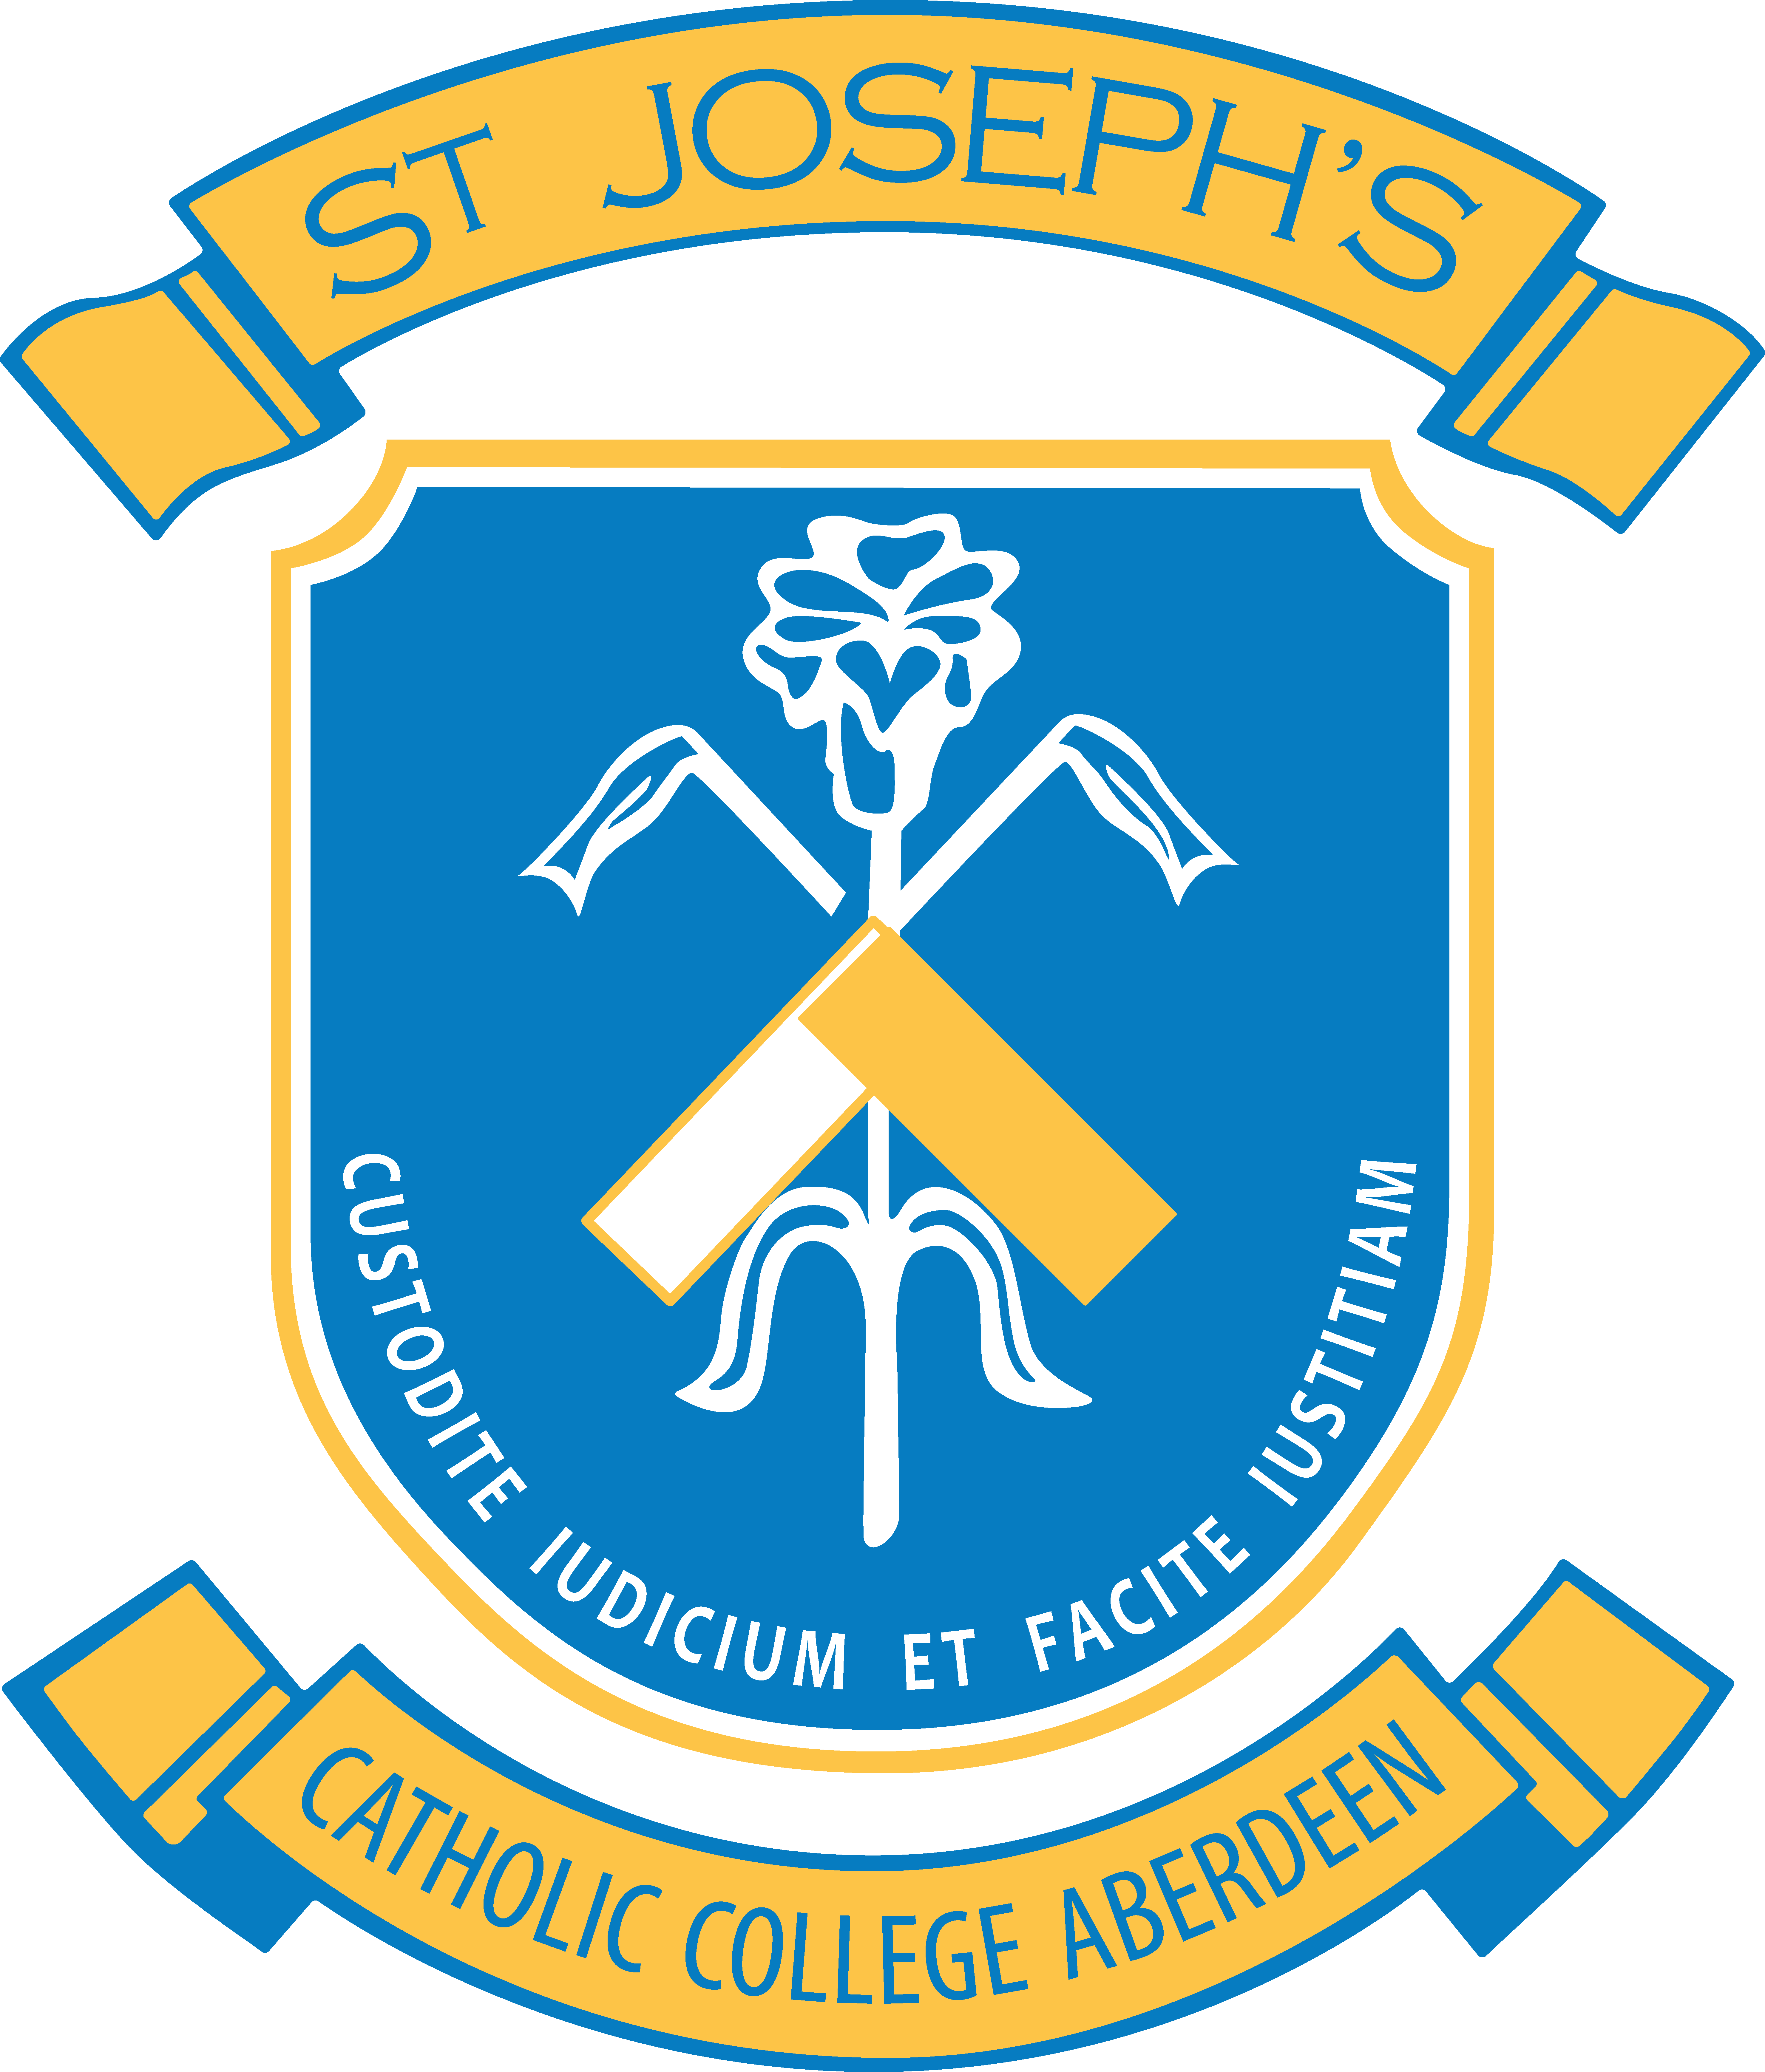 St Joseph's Catholic College, Aberdeen Crest